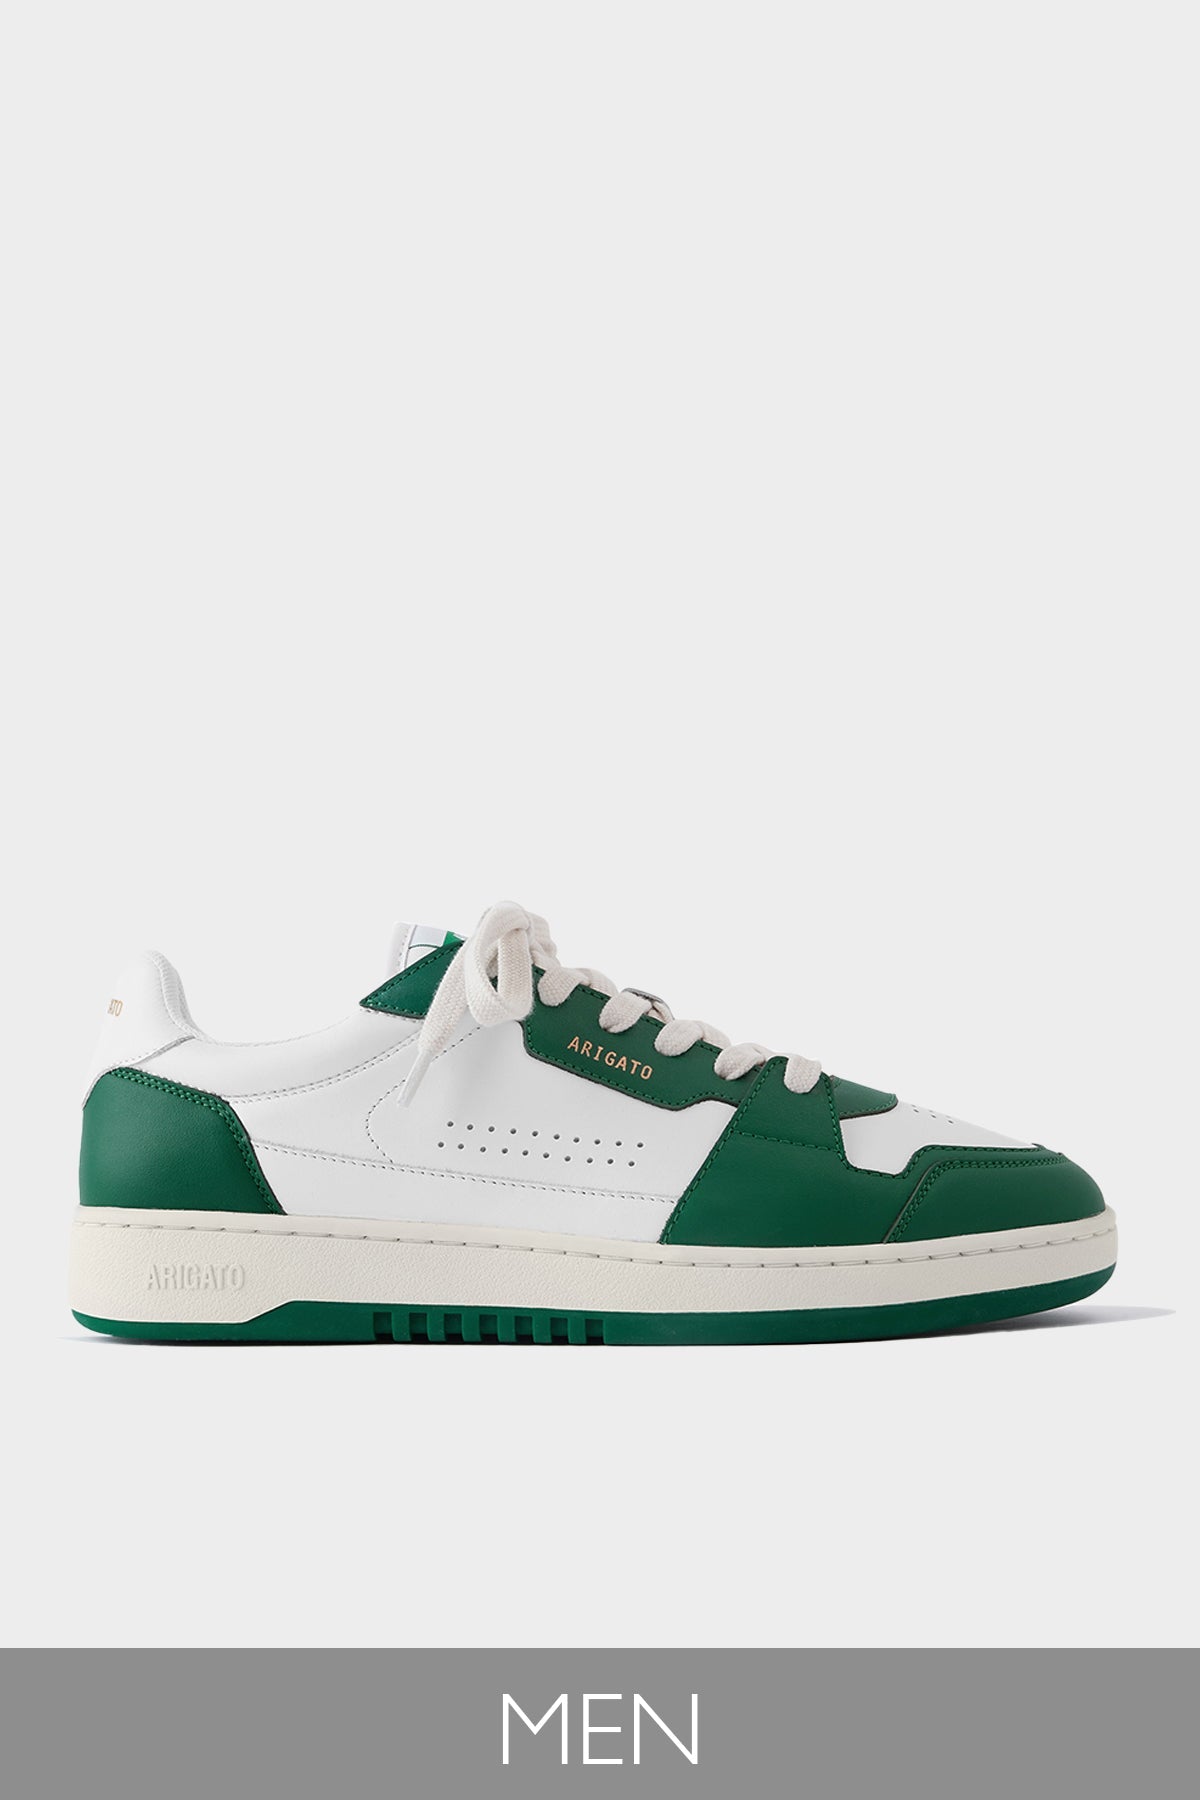 Dice Lo Men Sneaker in Green White - shop-olivia.com